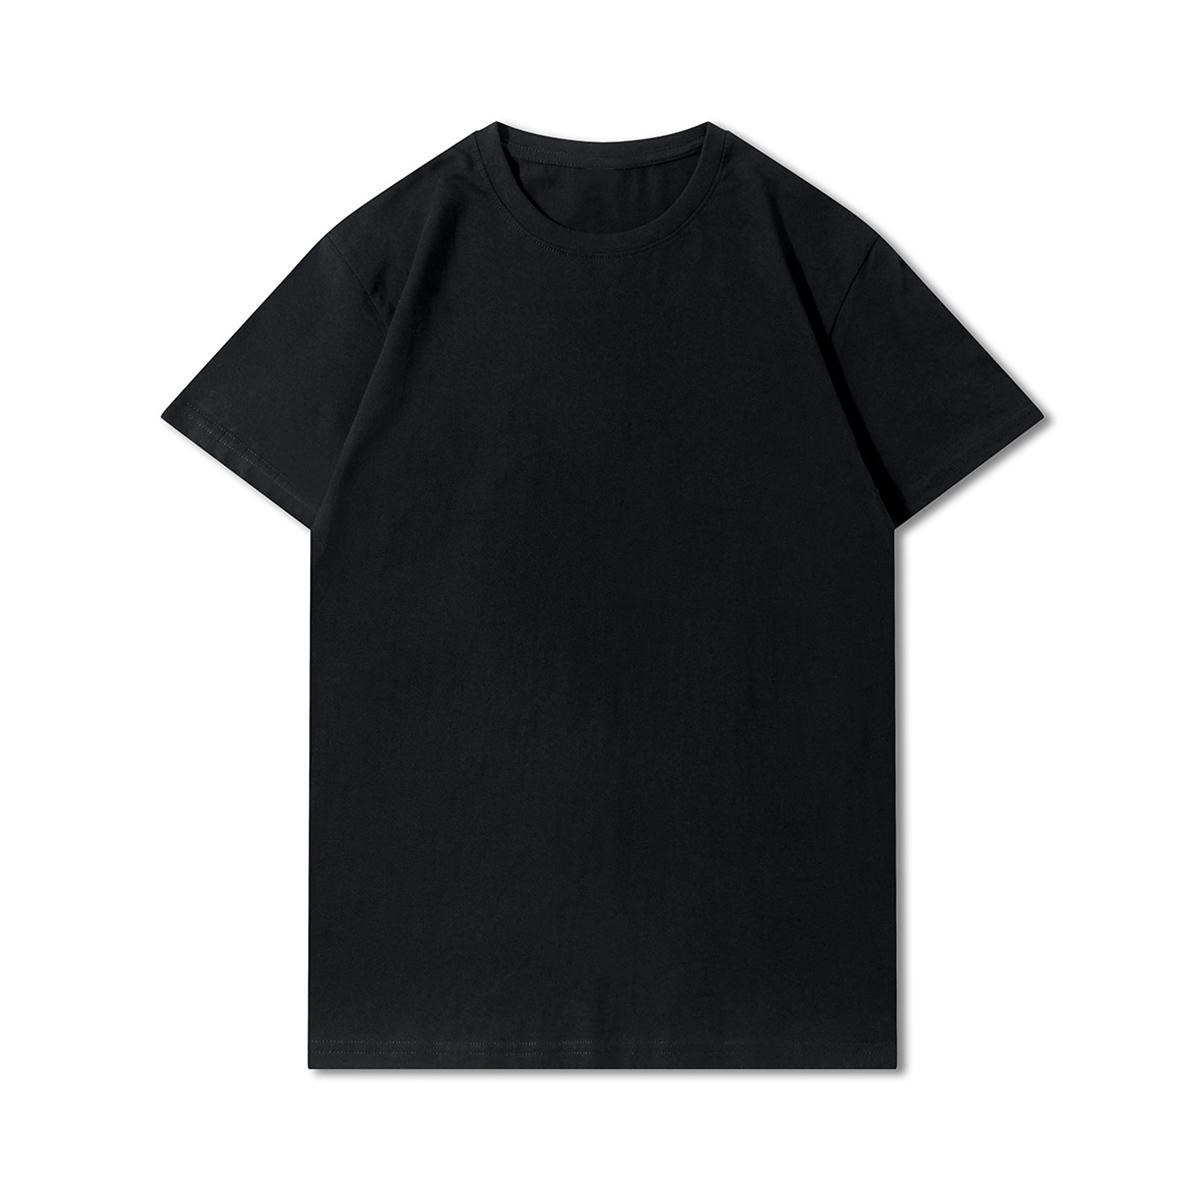 FT T Shirts 19 colors 110KG Plus Size S-5XL Men T Shirts Round Neck Cotton Tops Summer Oversize Casual Tees